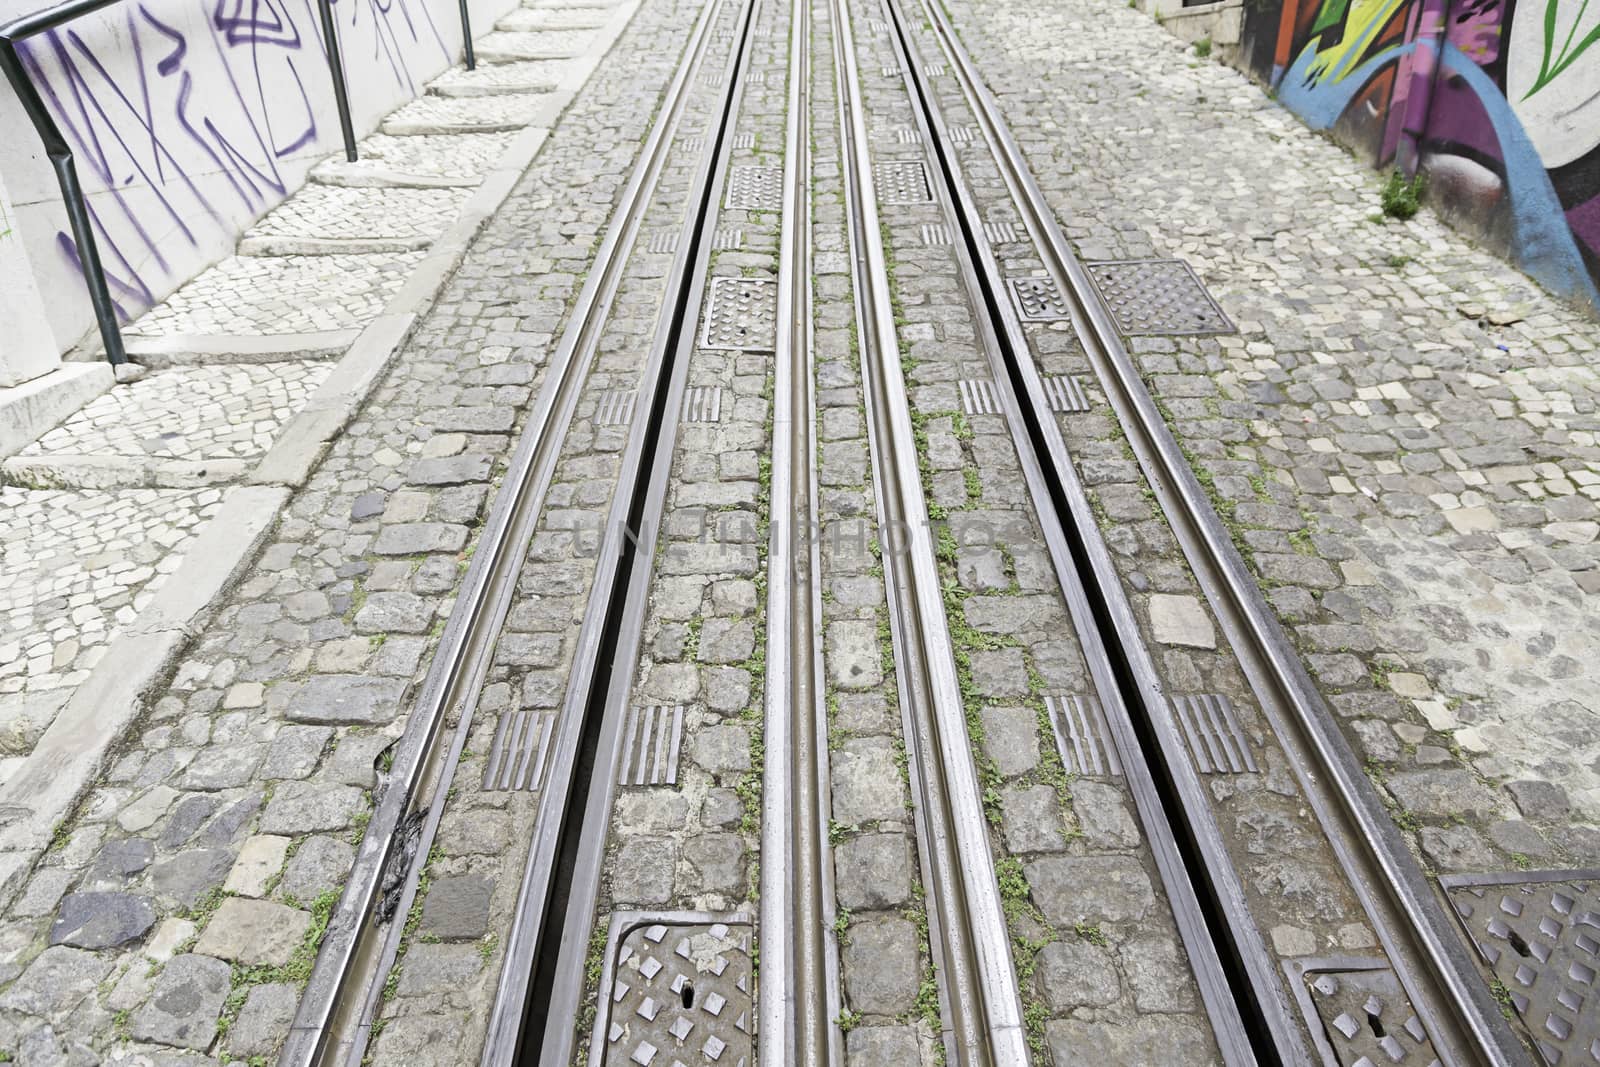 Tram tracks in the city by esebene